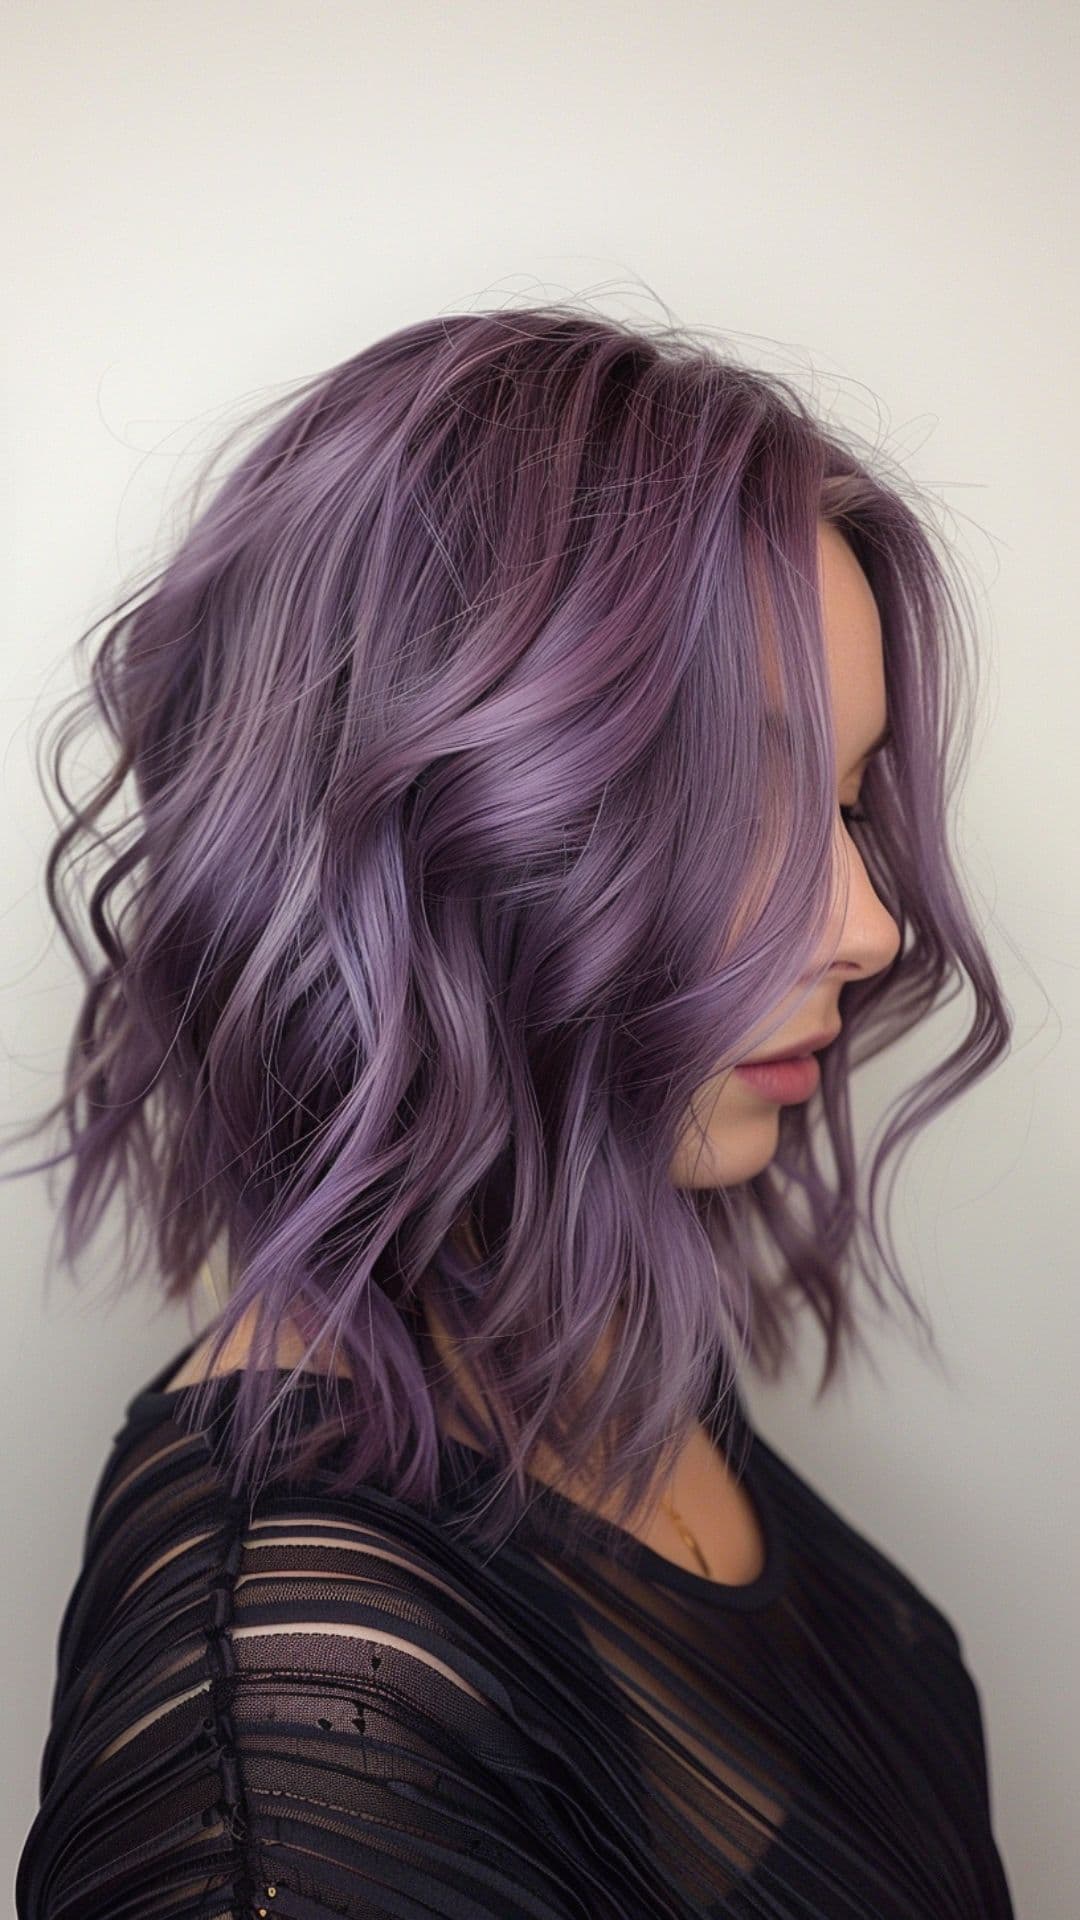 A woman modelling a smokey purple hair color.